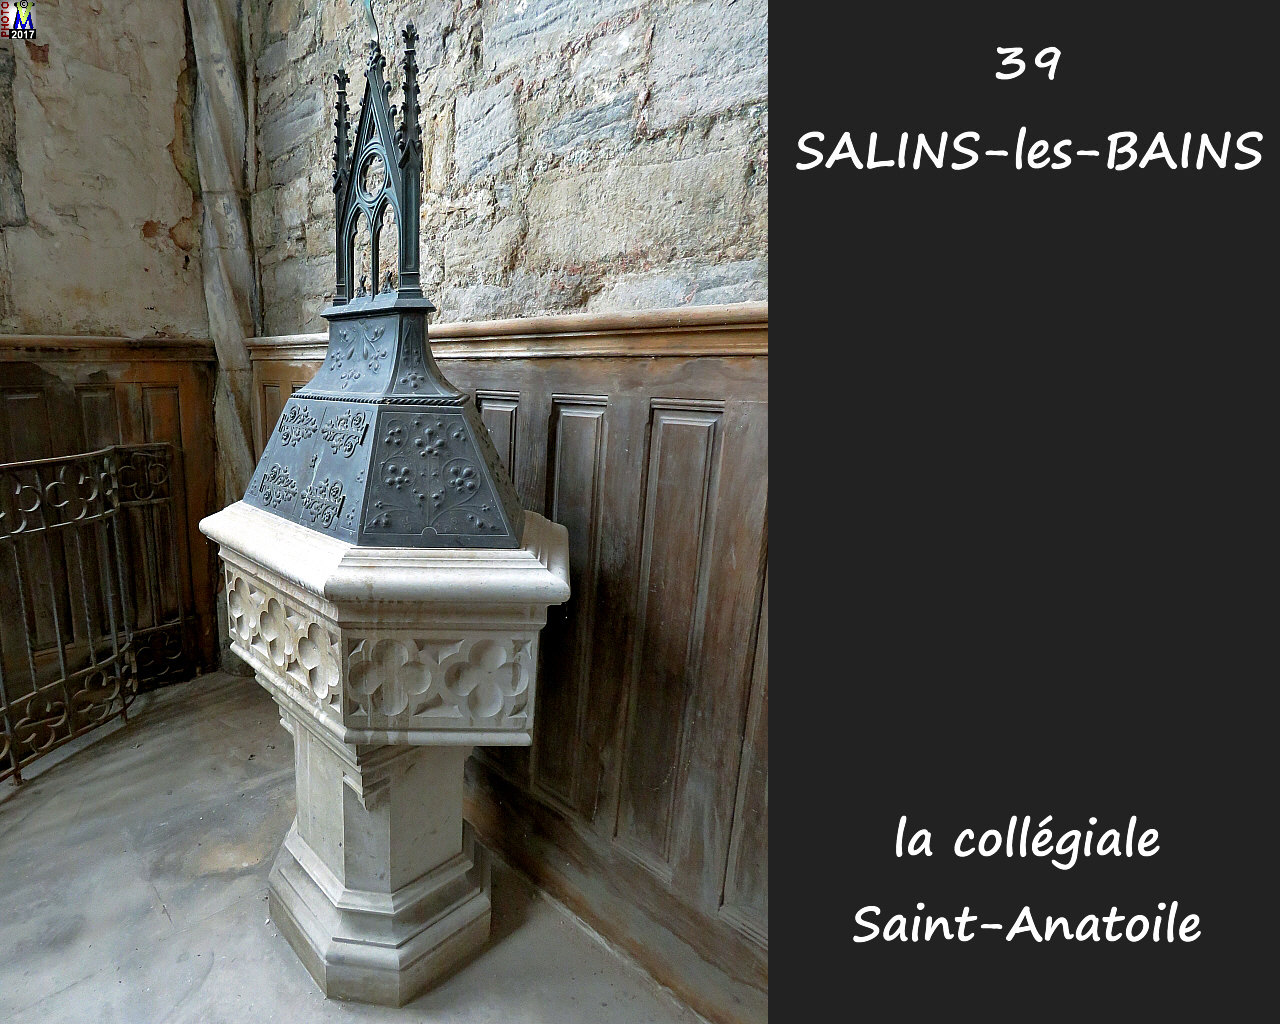 39SALINS-LES-BAINS_collegiale_256.jpg